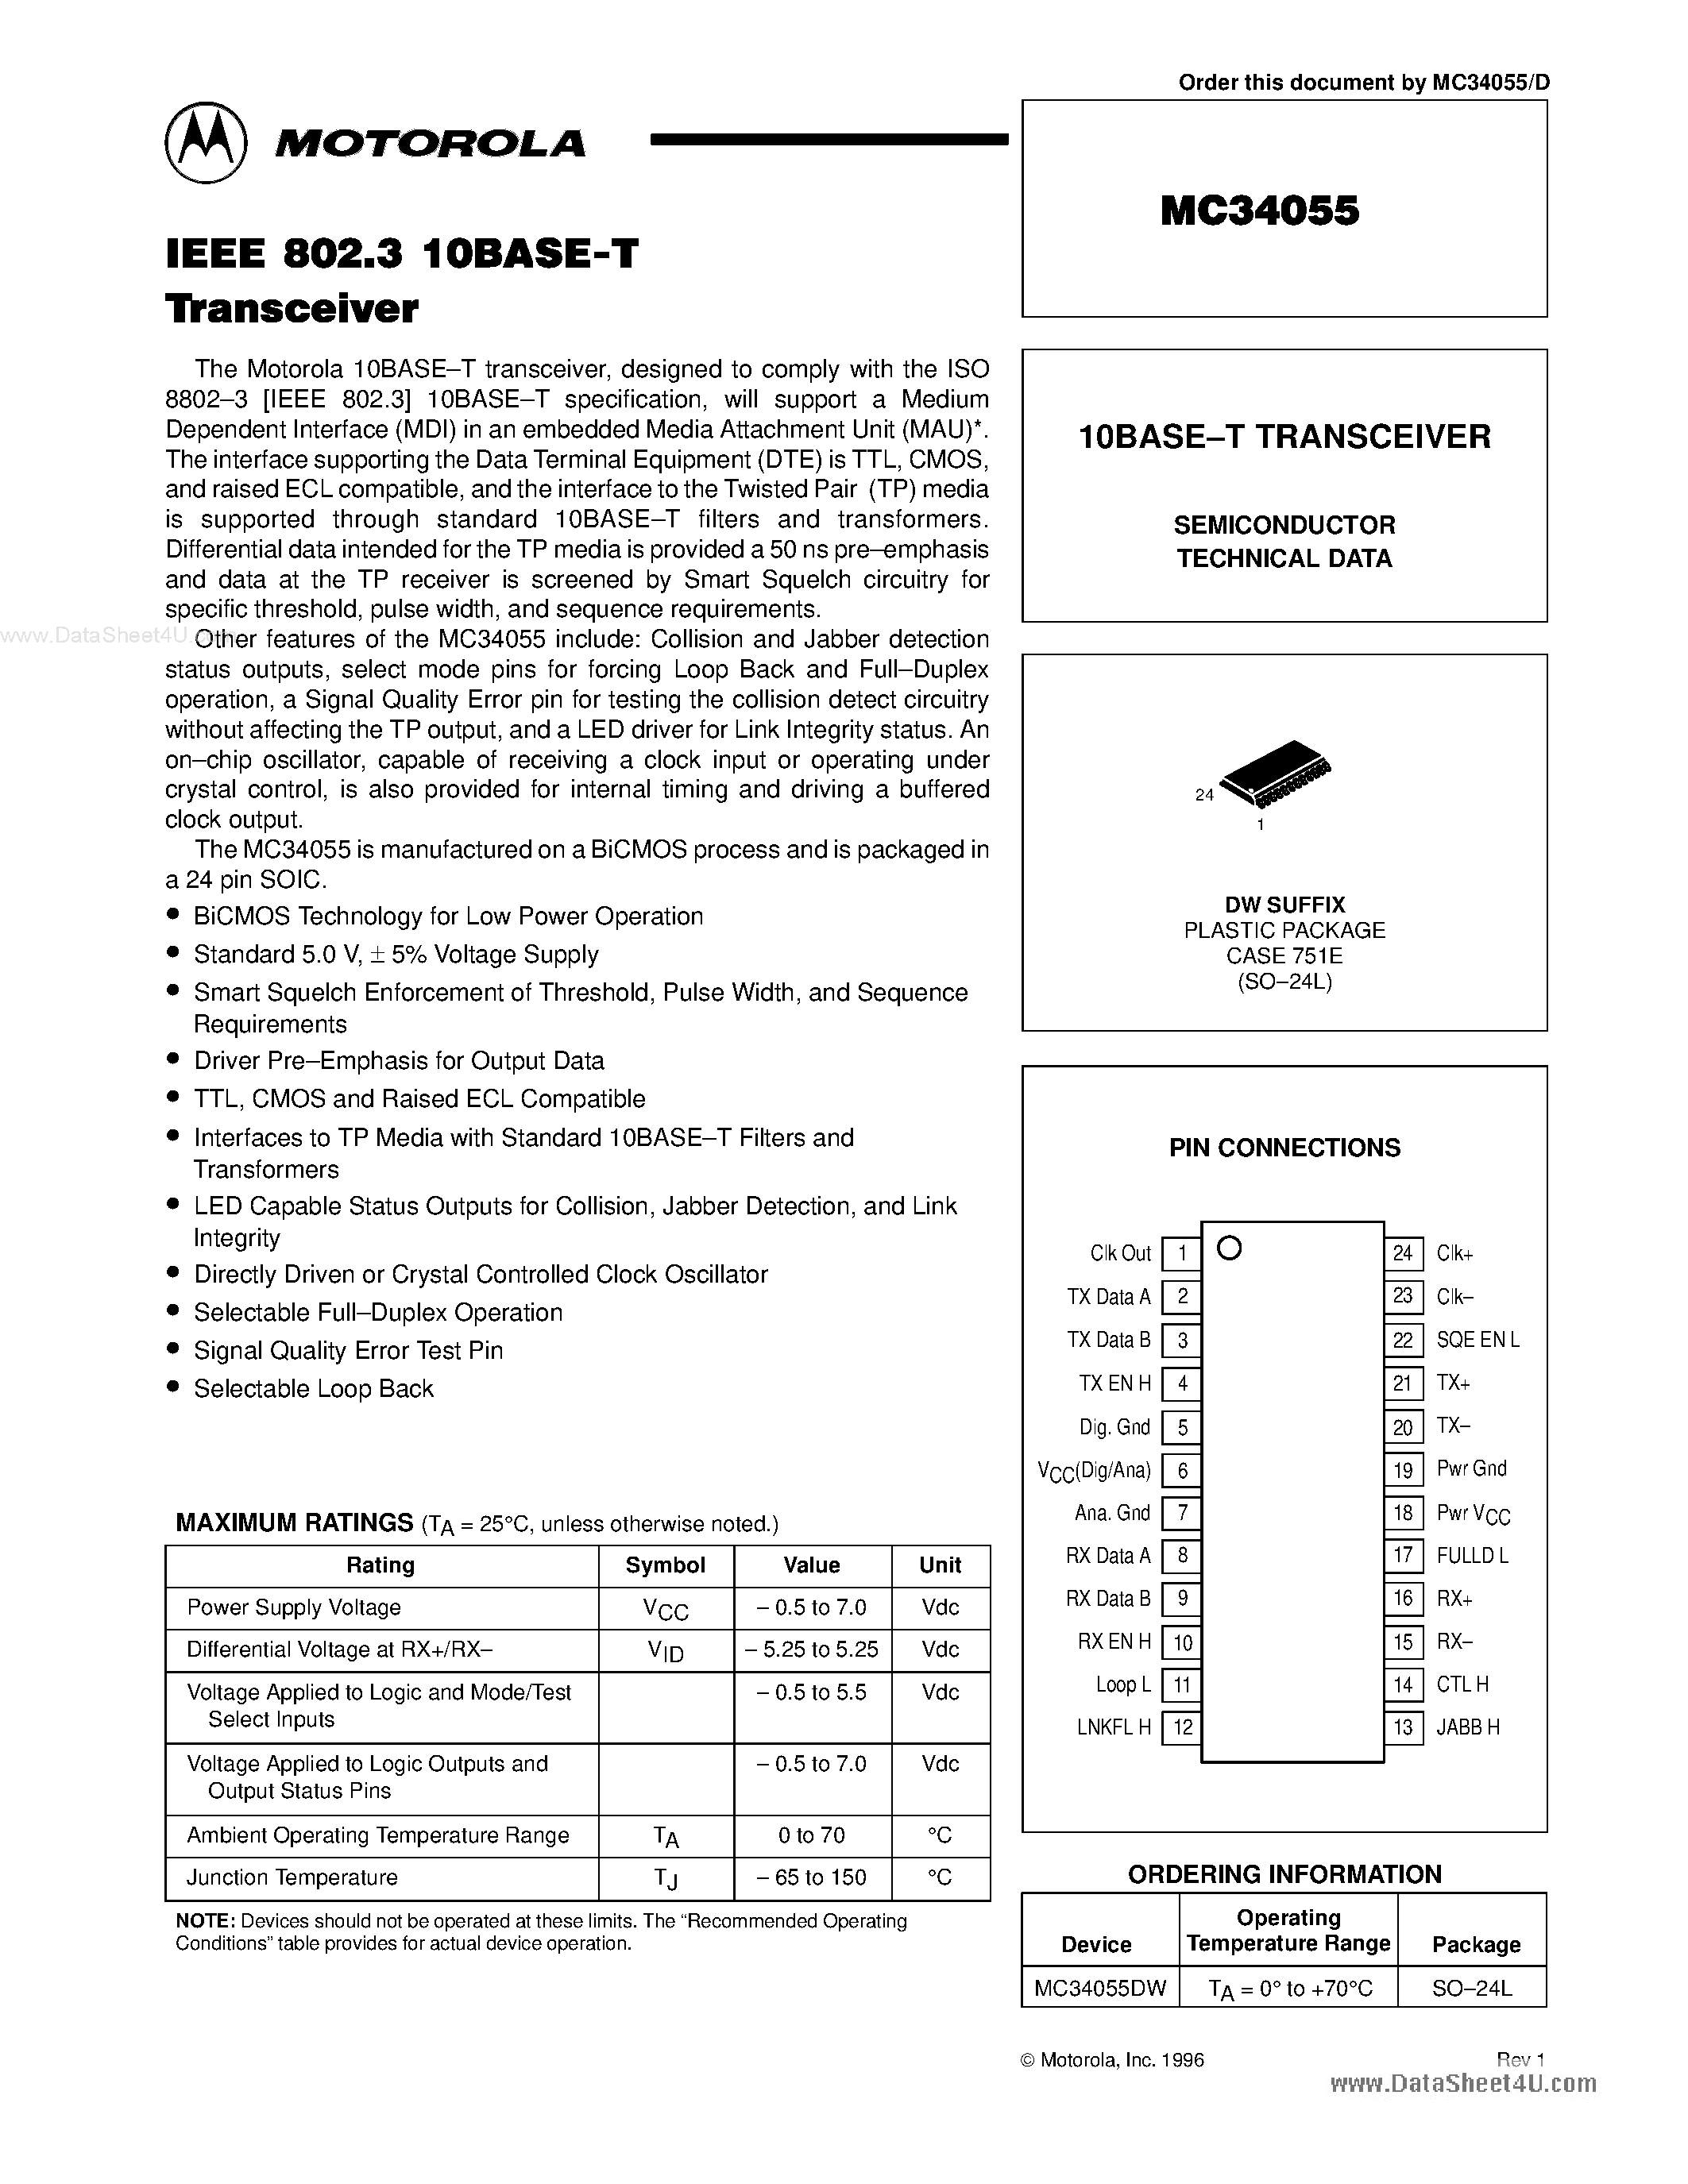 Datasheet MC34055 - IEEE 802.3 10BASE-T TRANSCEIVER page 1